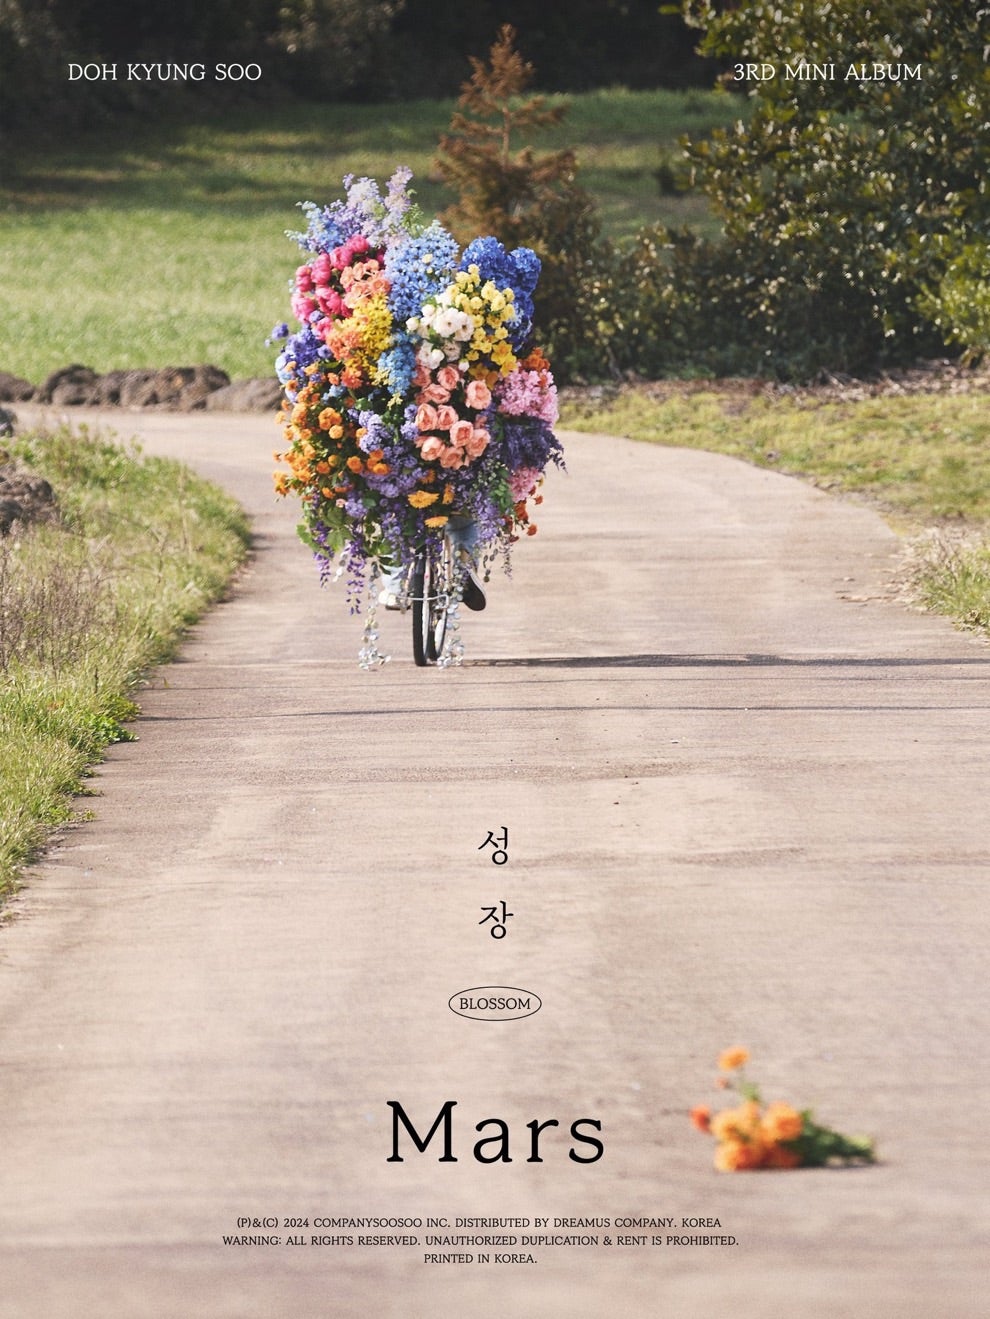 ‘Mars’ Concept photoのギョンス♡の記事より